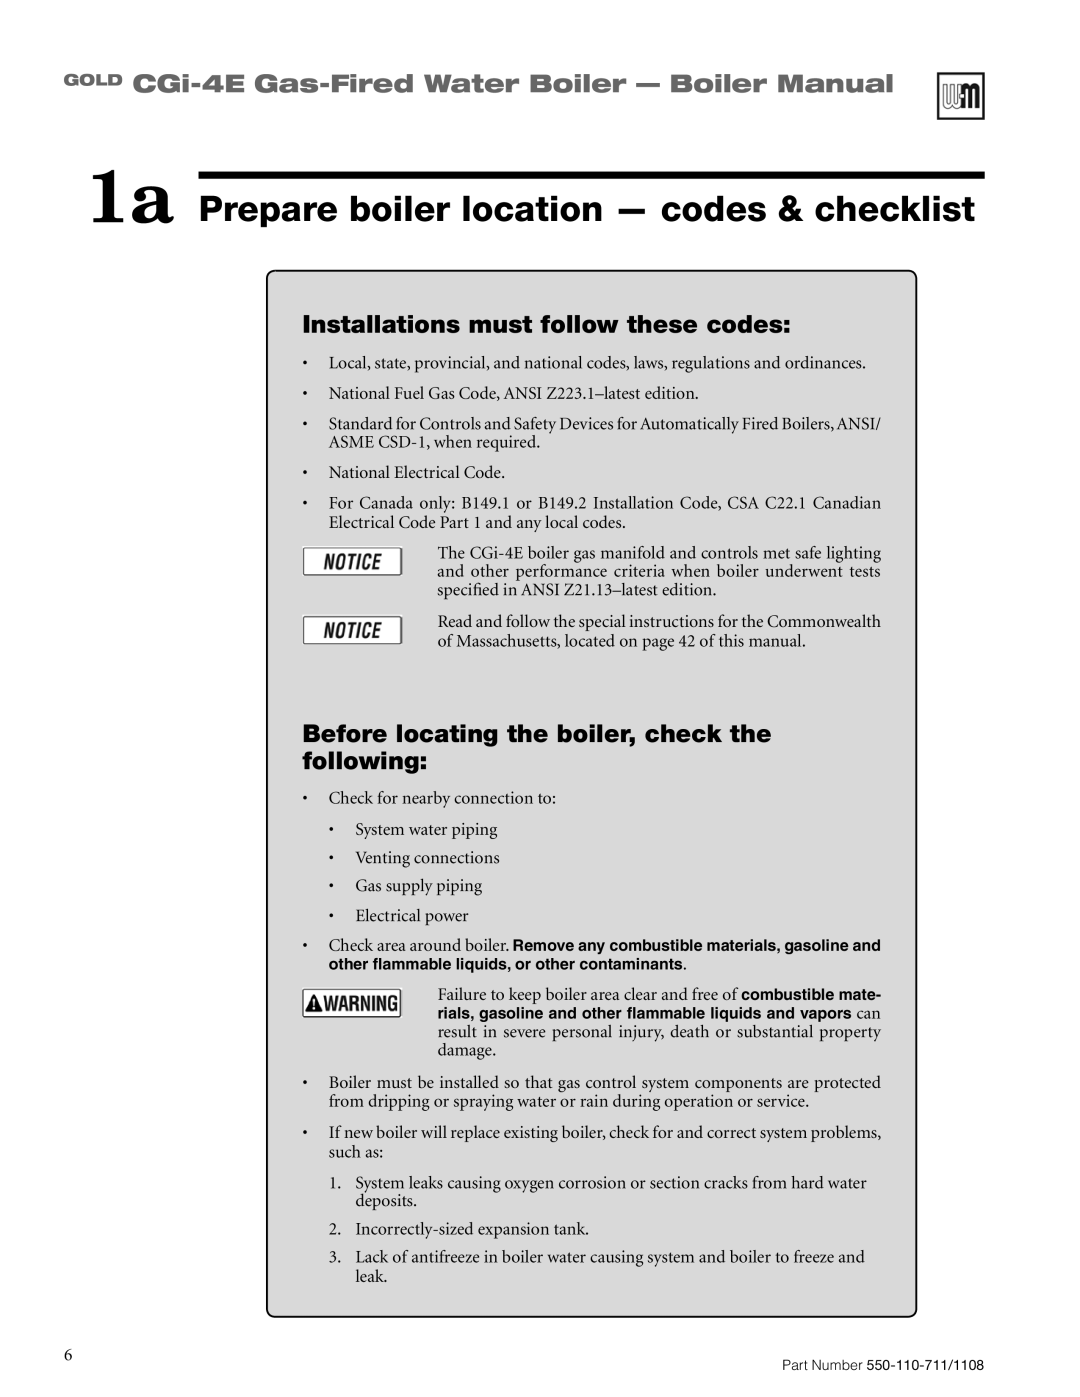 Weil-McLain CGI-4E manual 1a Prepare boiler location - codes & checklist, GOLD CGi-4E Gas-FiredWater Boiler - Boiler Manual 